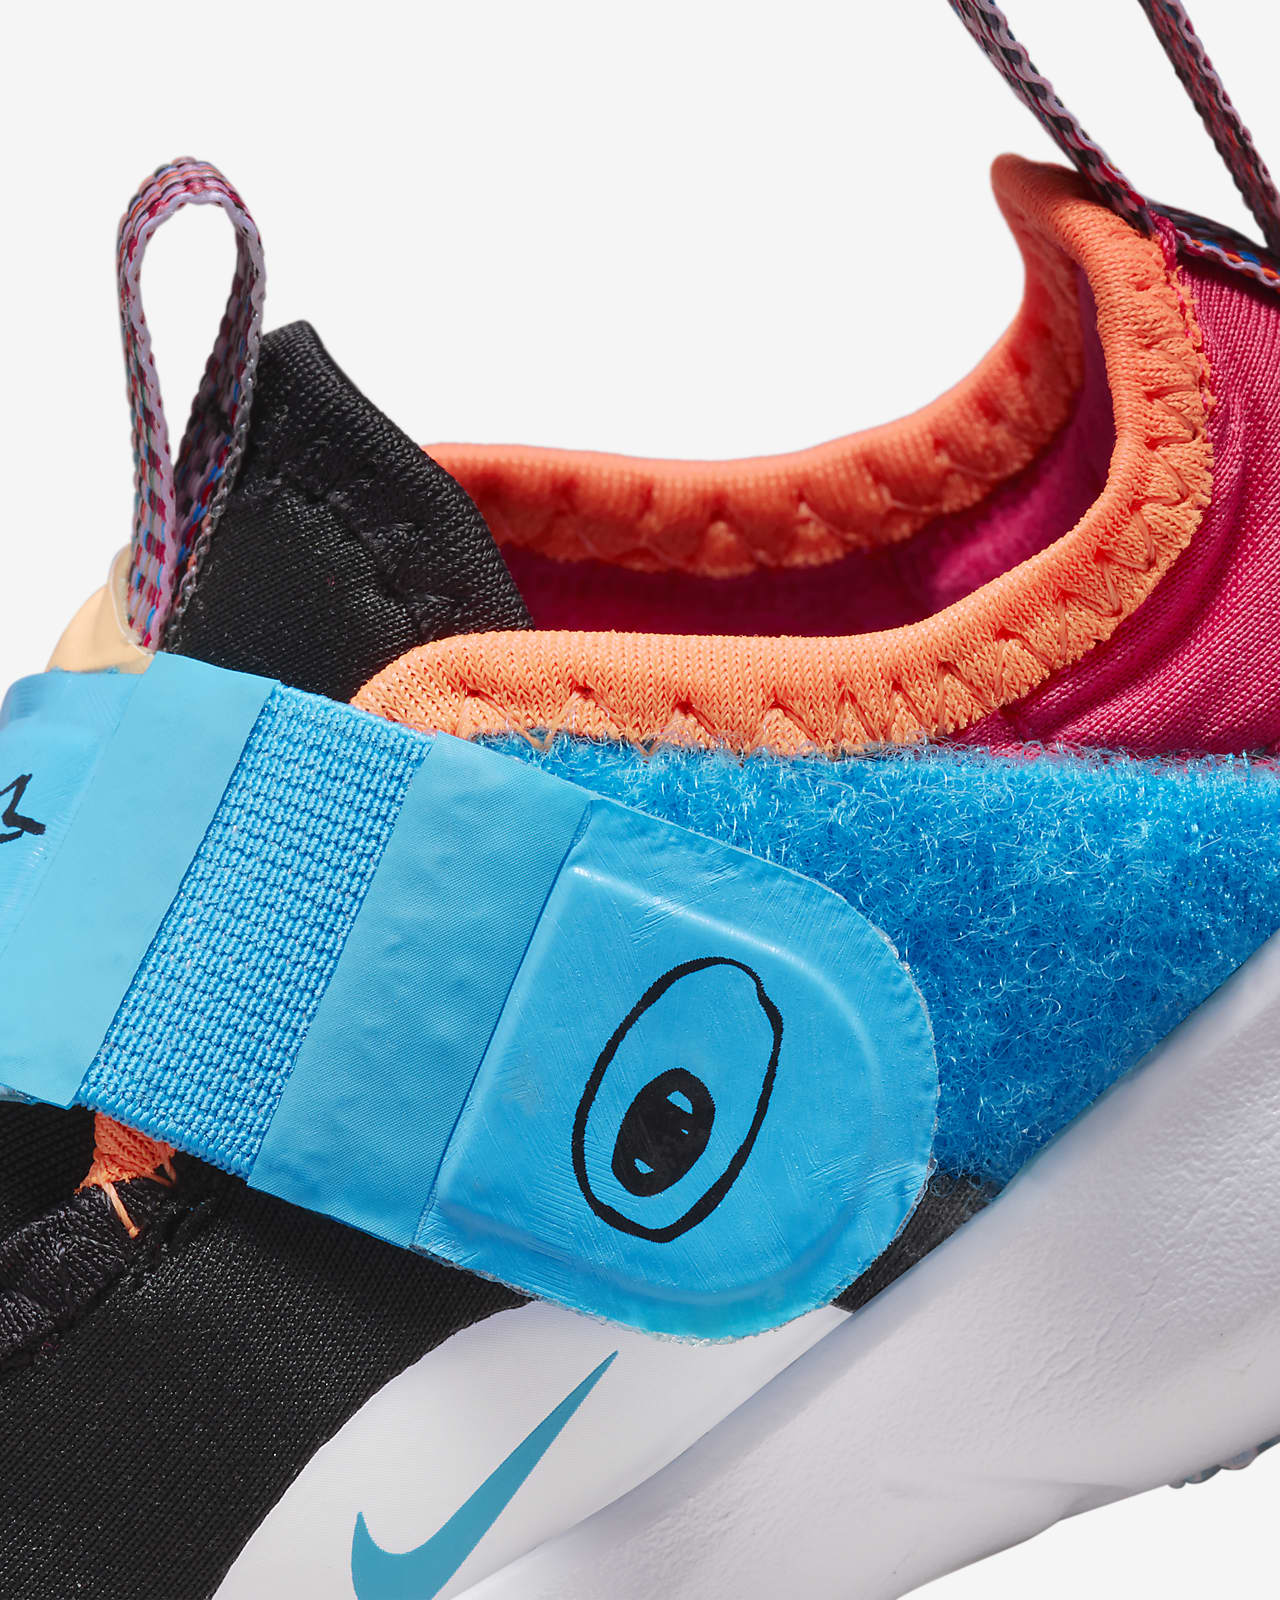 Calzado Nike Flex Advance SE para niños de preescolar.